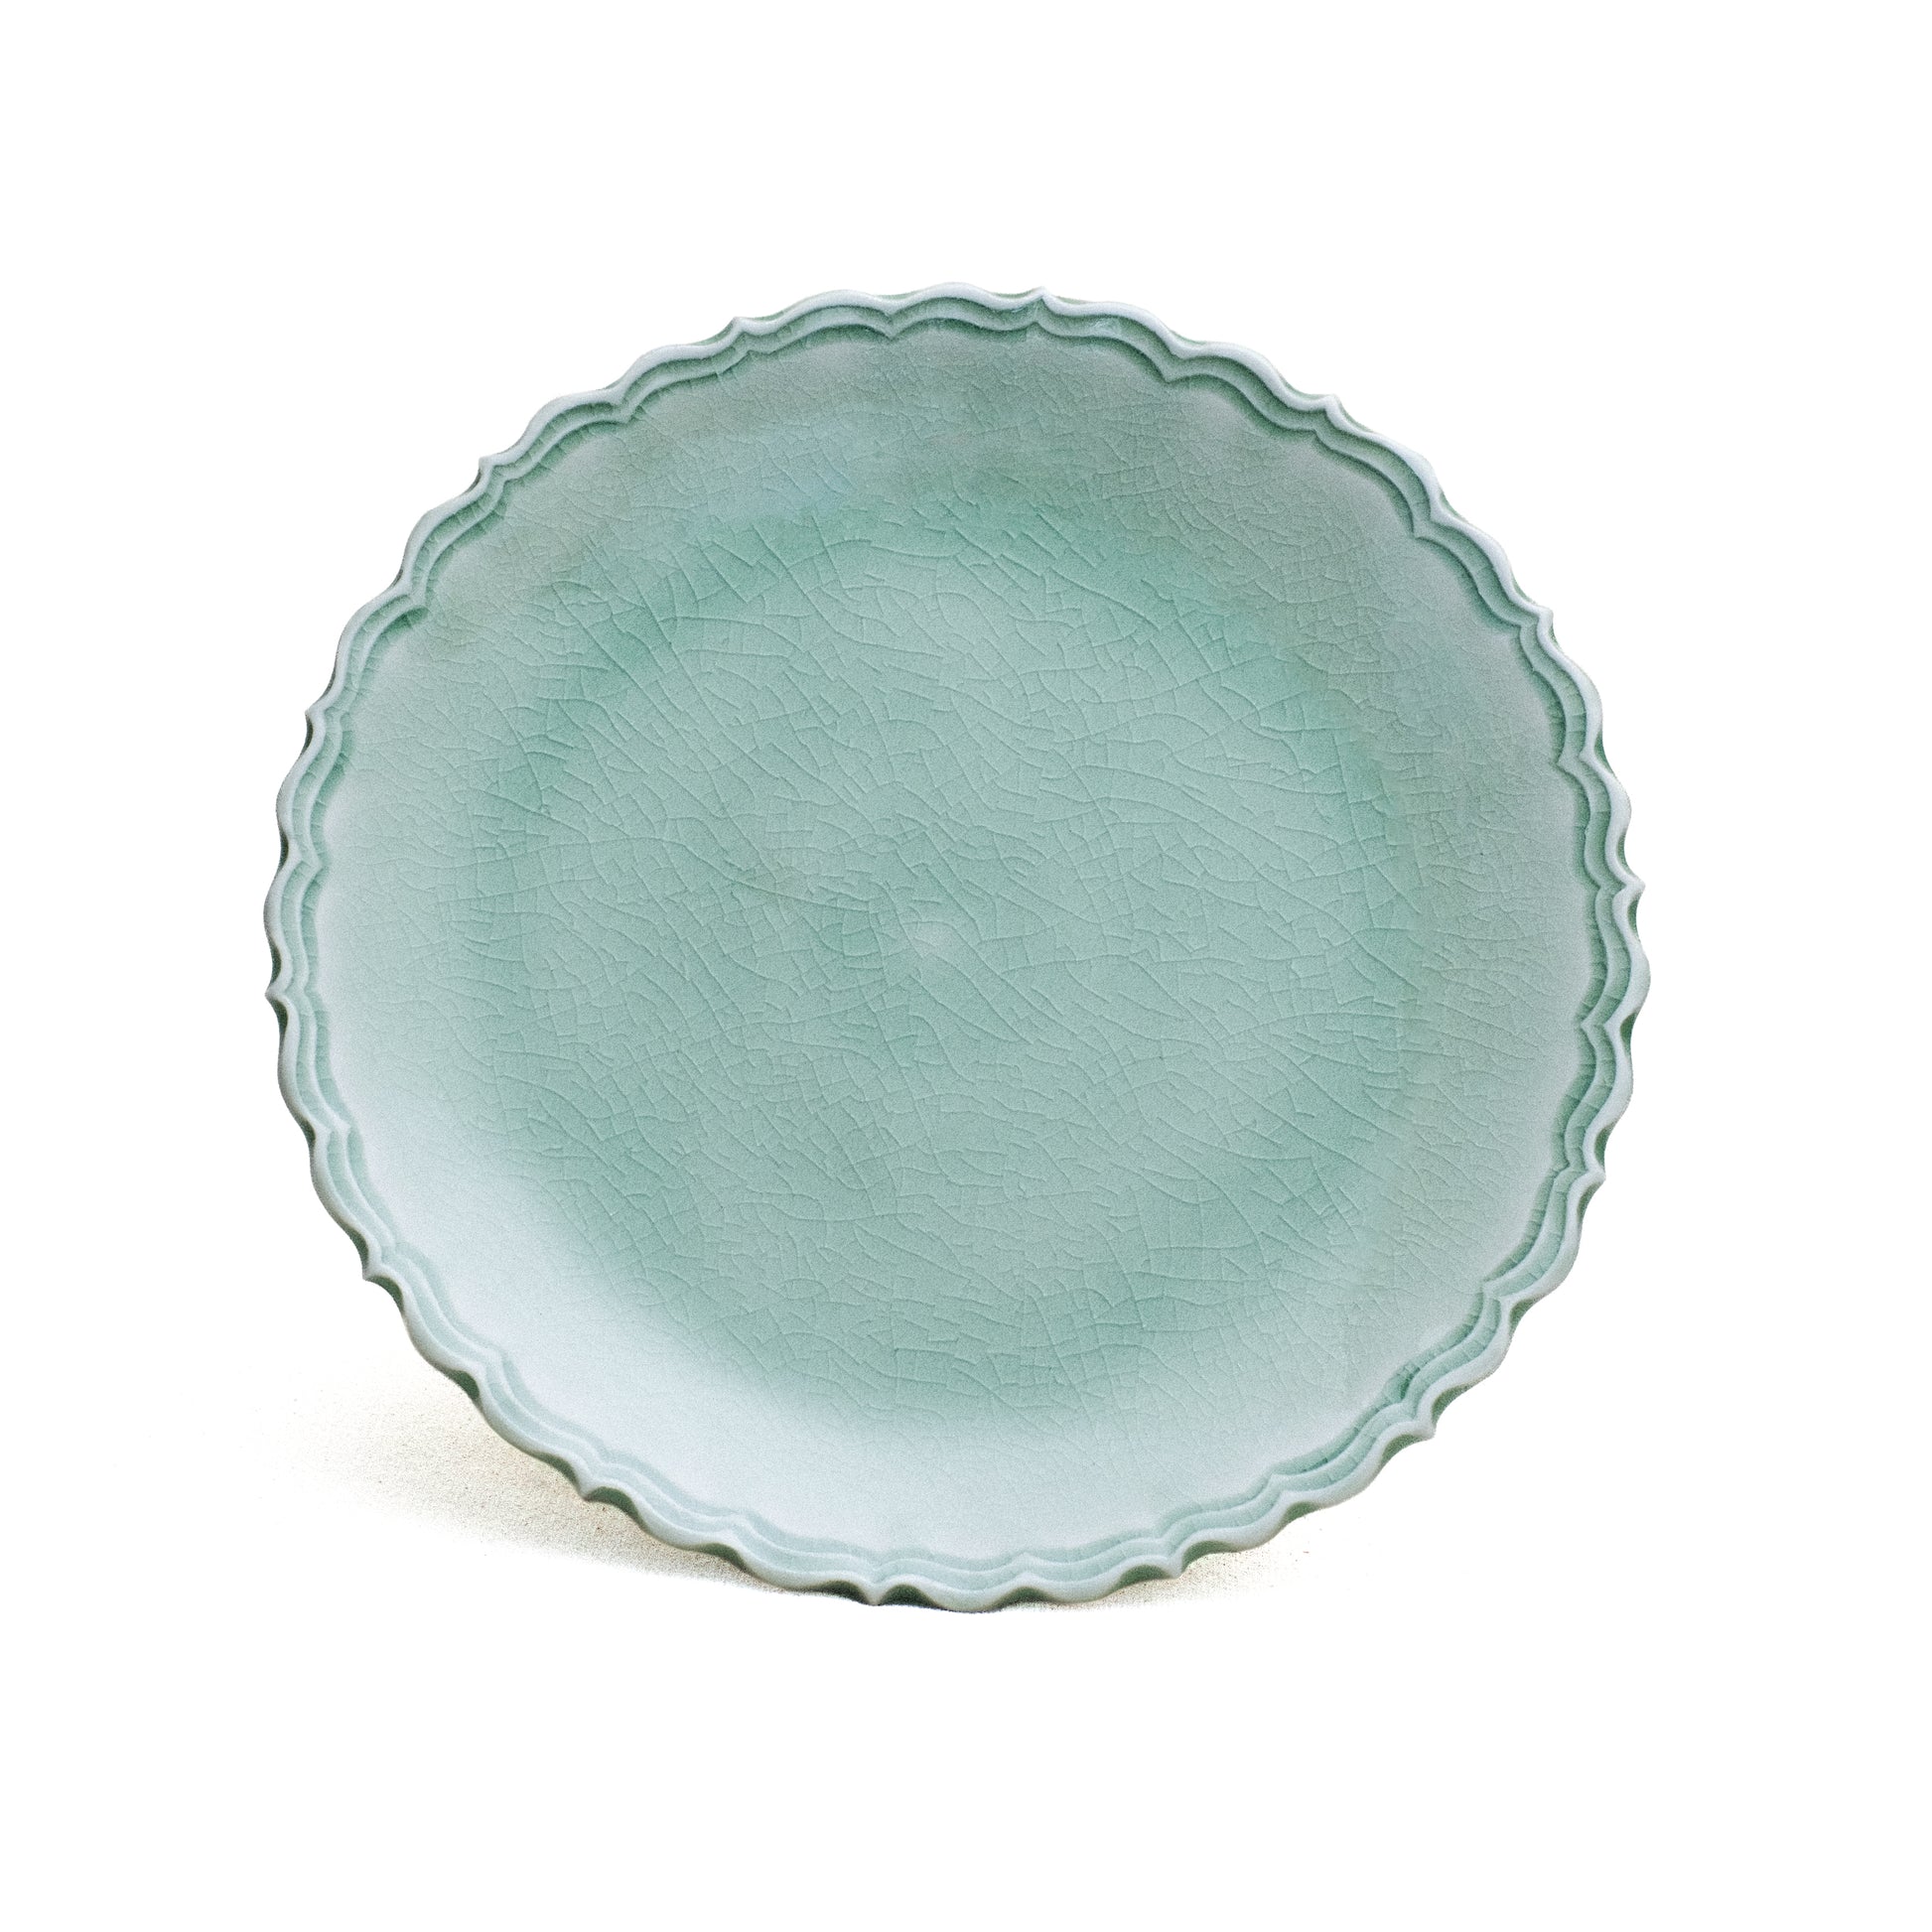 Plate, Carved Edge, Green Glaze.